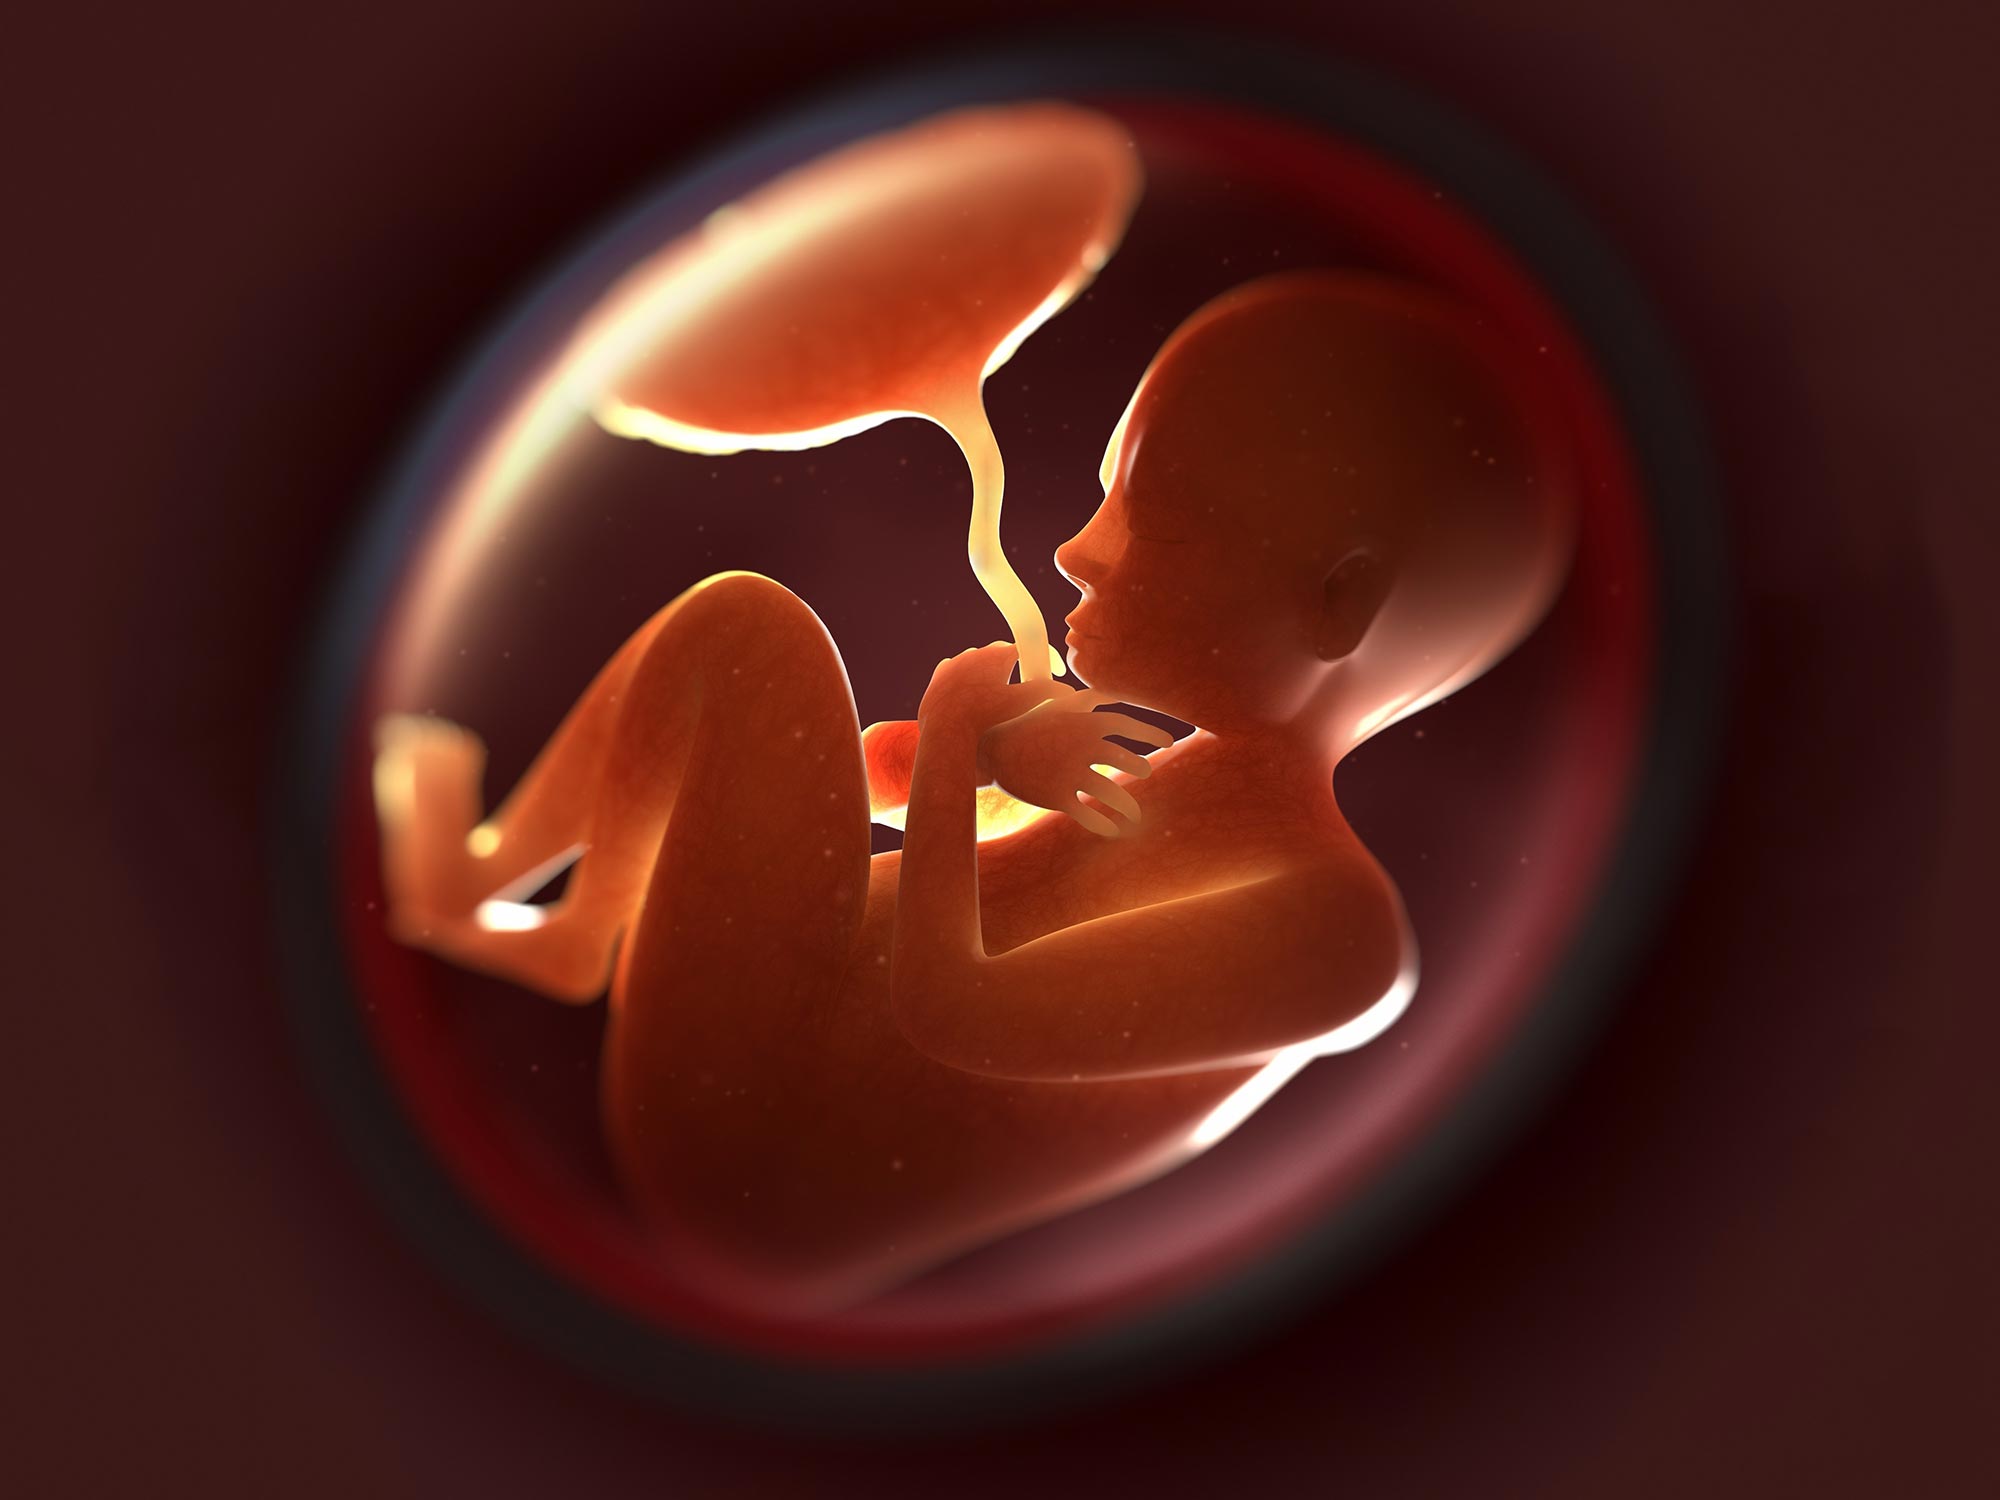 Fetus in Womb